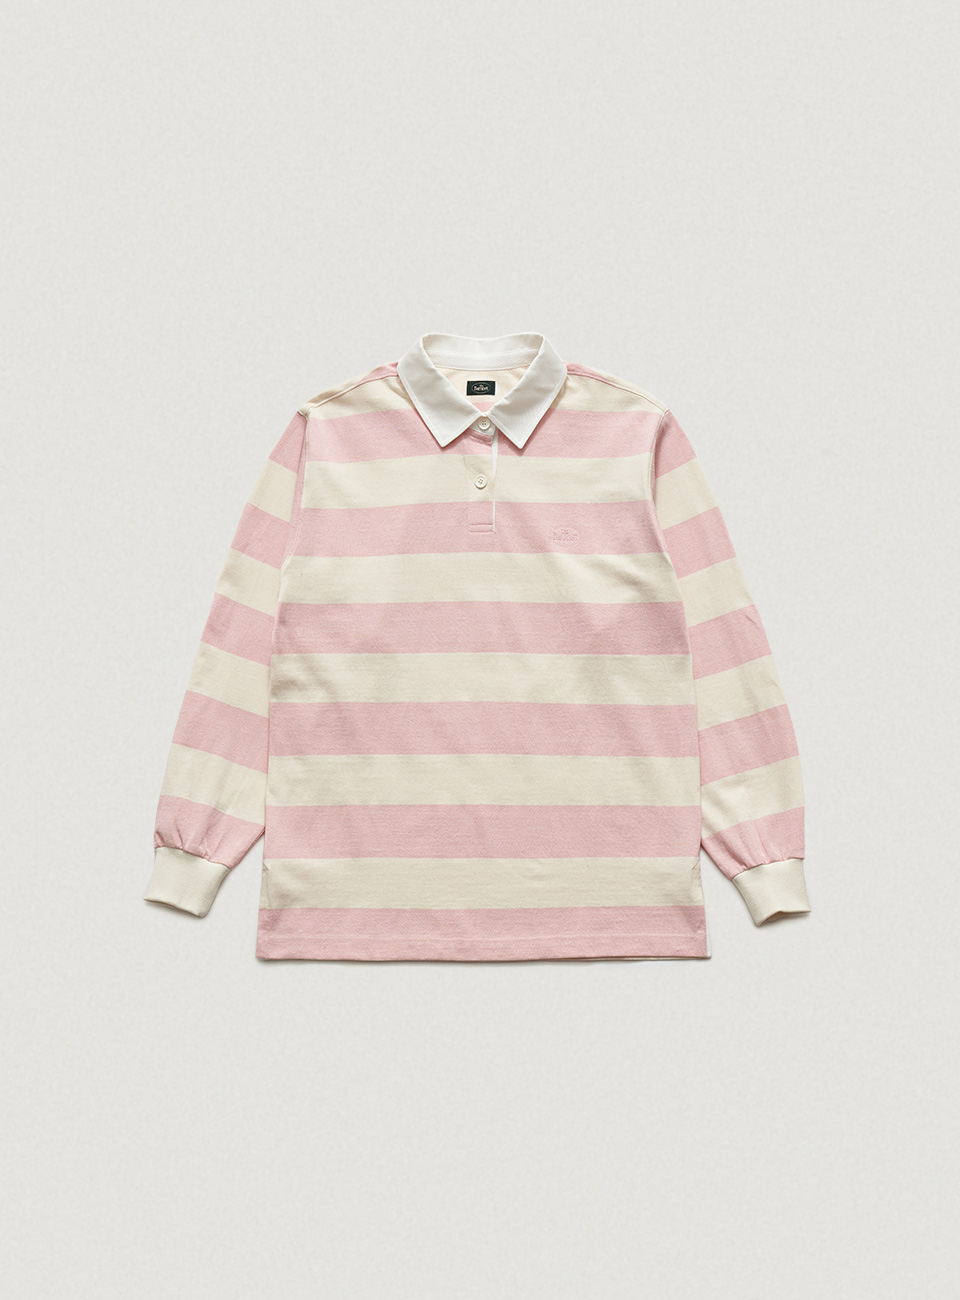 Pink Classic Striped Rugby Shirt [6월 초 순차 배송]